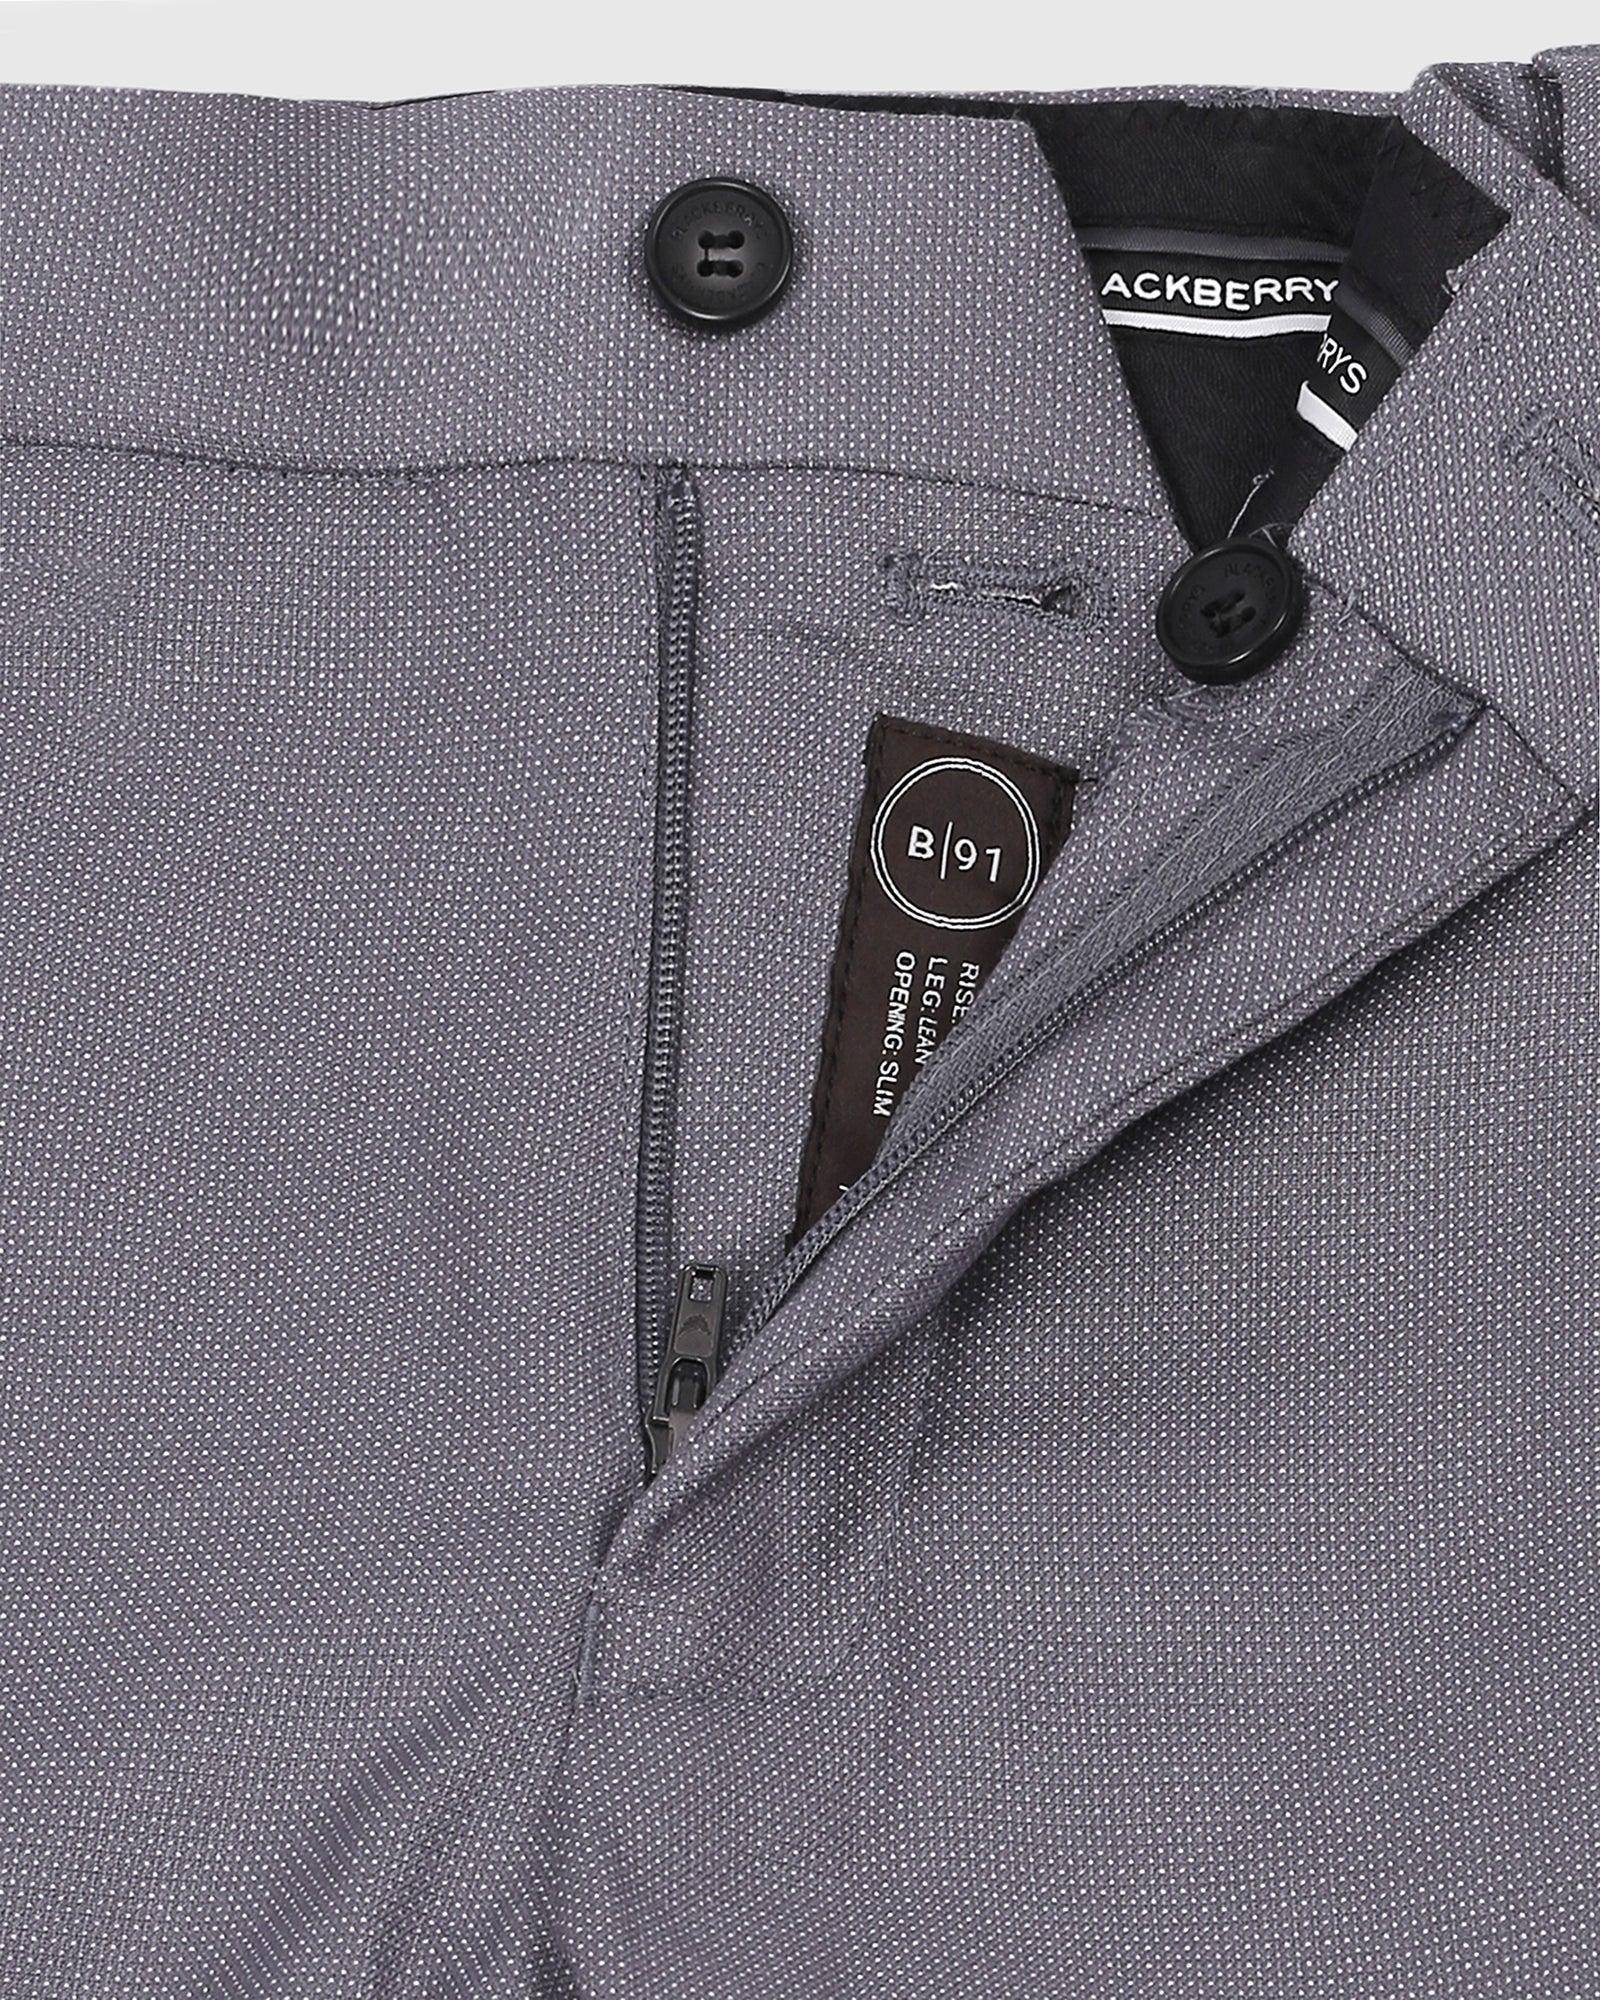 Slim Fit B-91 Formal Grey Textured Trouser - Miron